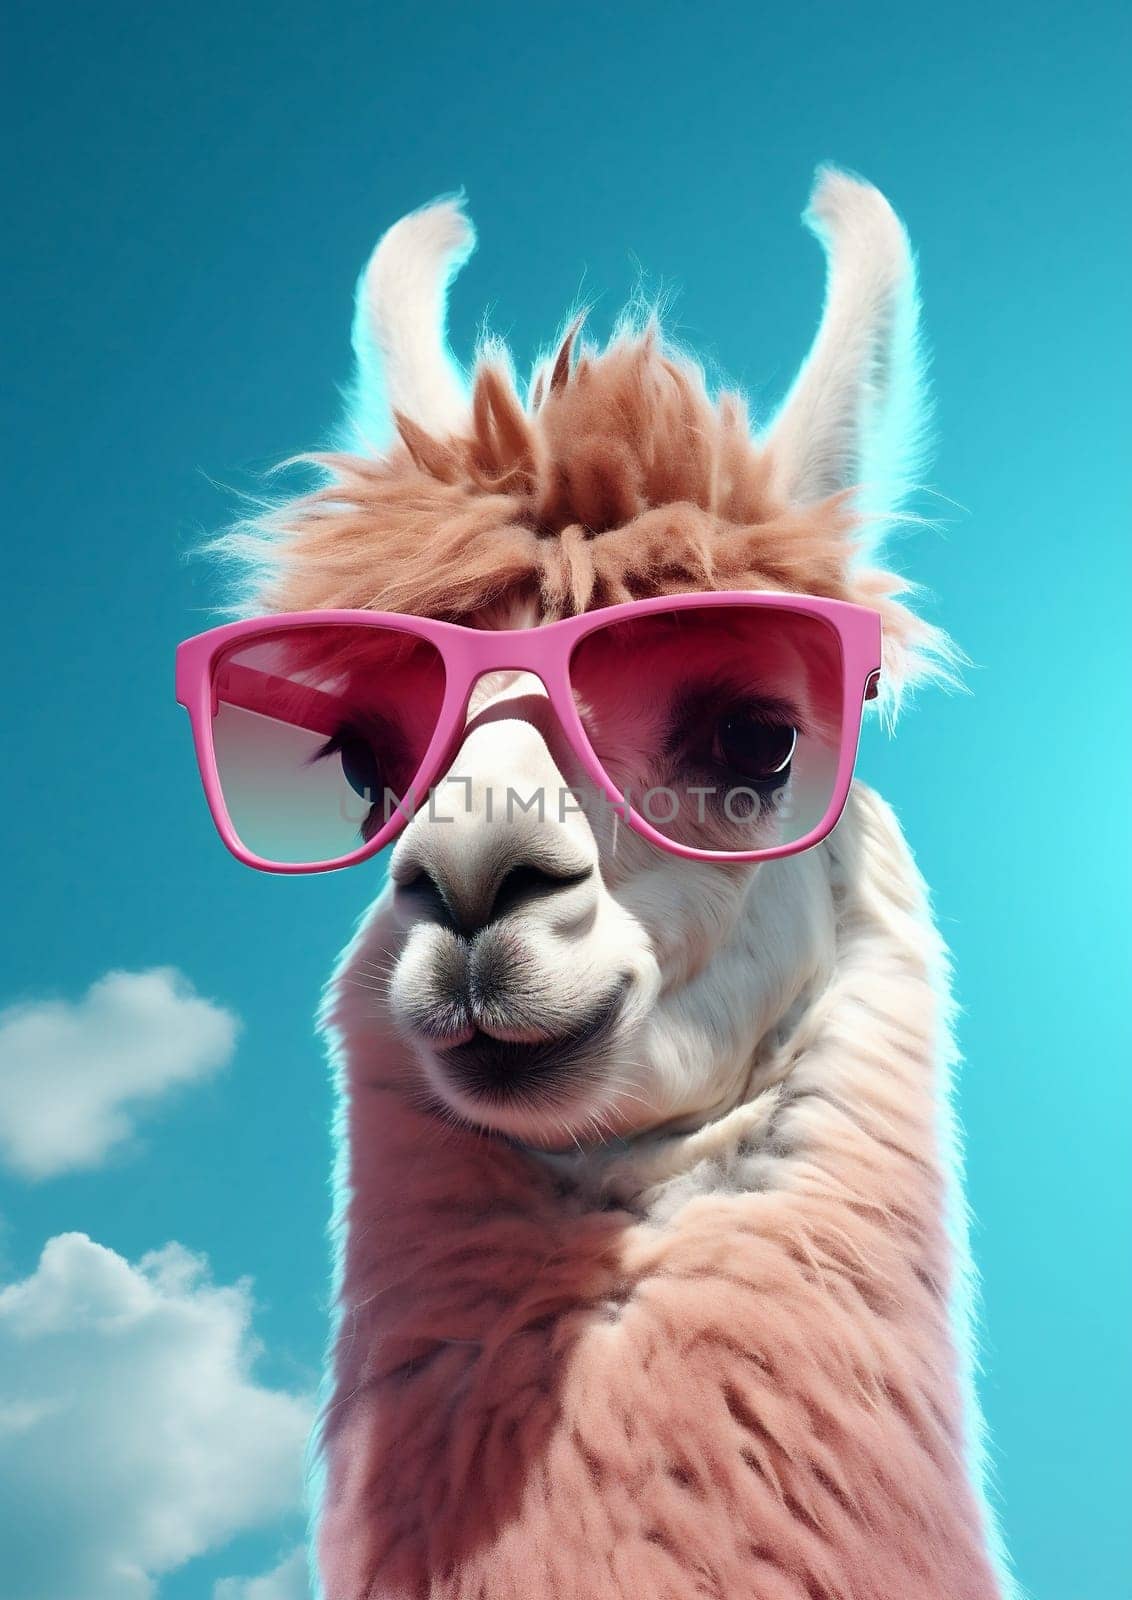 Cute stylish alpaca portrait of llama wearing glasses on blue background wearing glasses and scarf, fashion by Vichizh